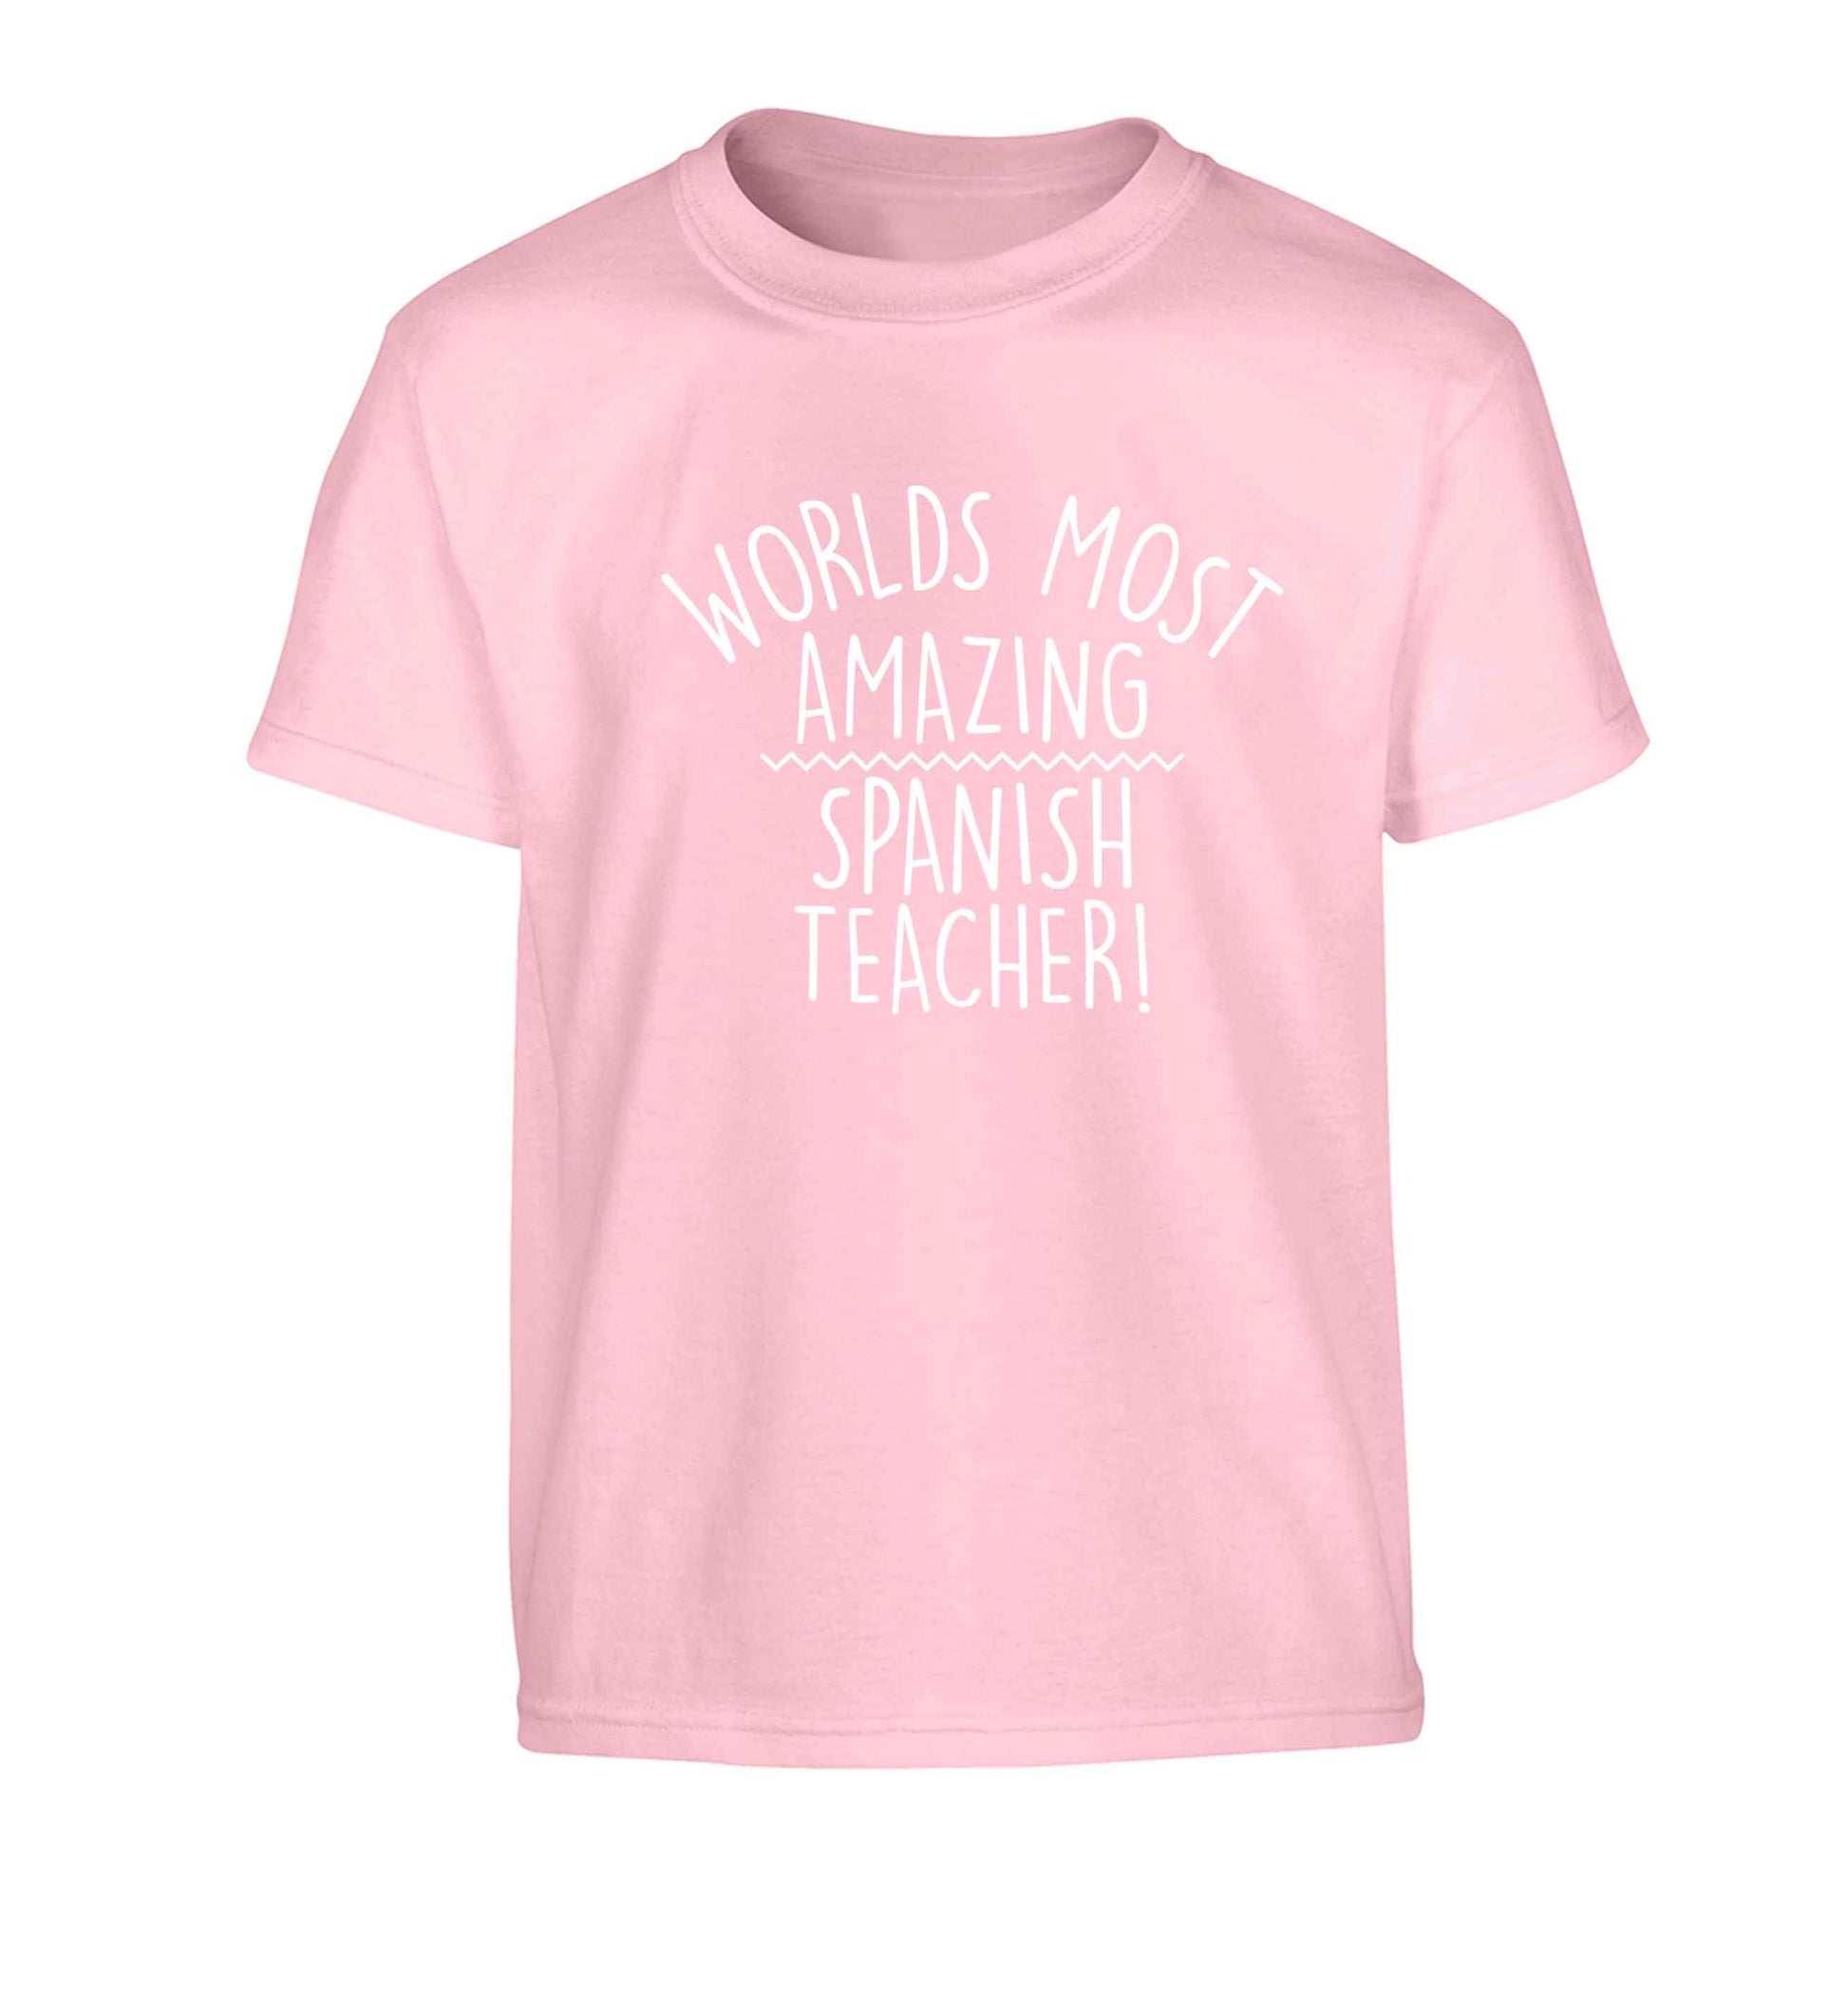 Worlds most amazing Spanish teacher Children's light pink Tshirt 12-13 Years